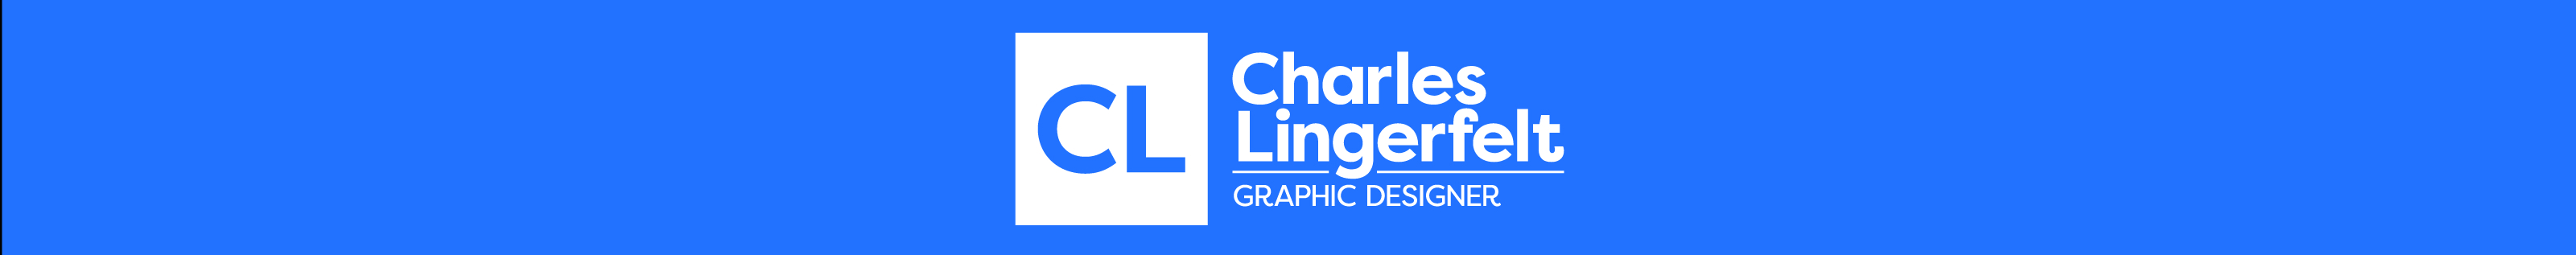 Profielbanner van Charles Lingerfelt